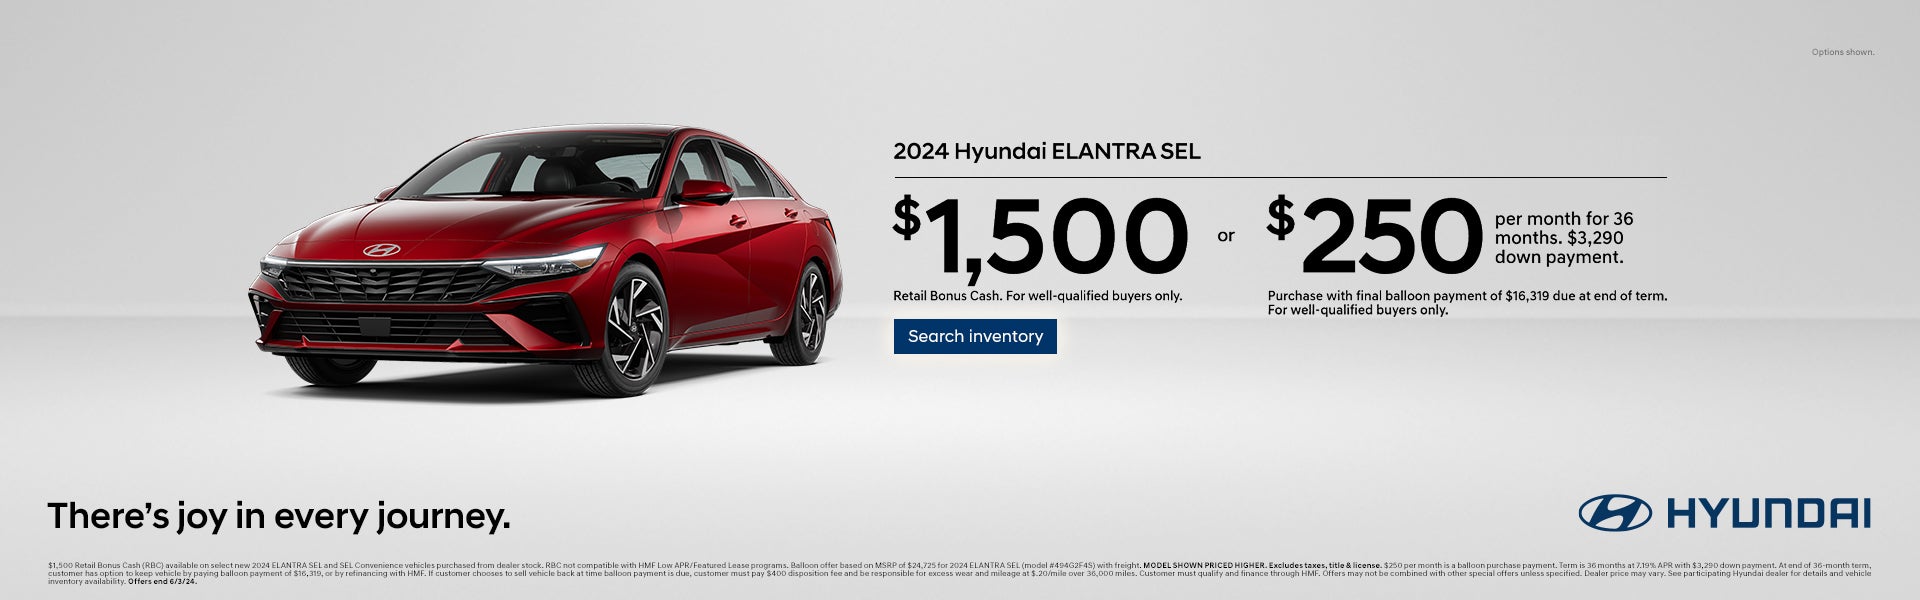 2024 Hyundai Elantra Lease Promo